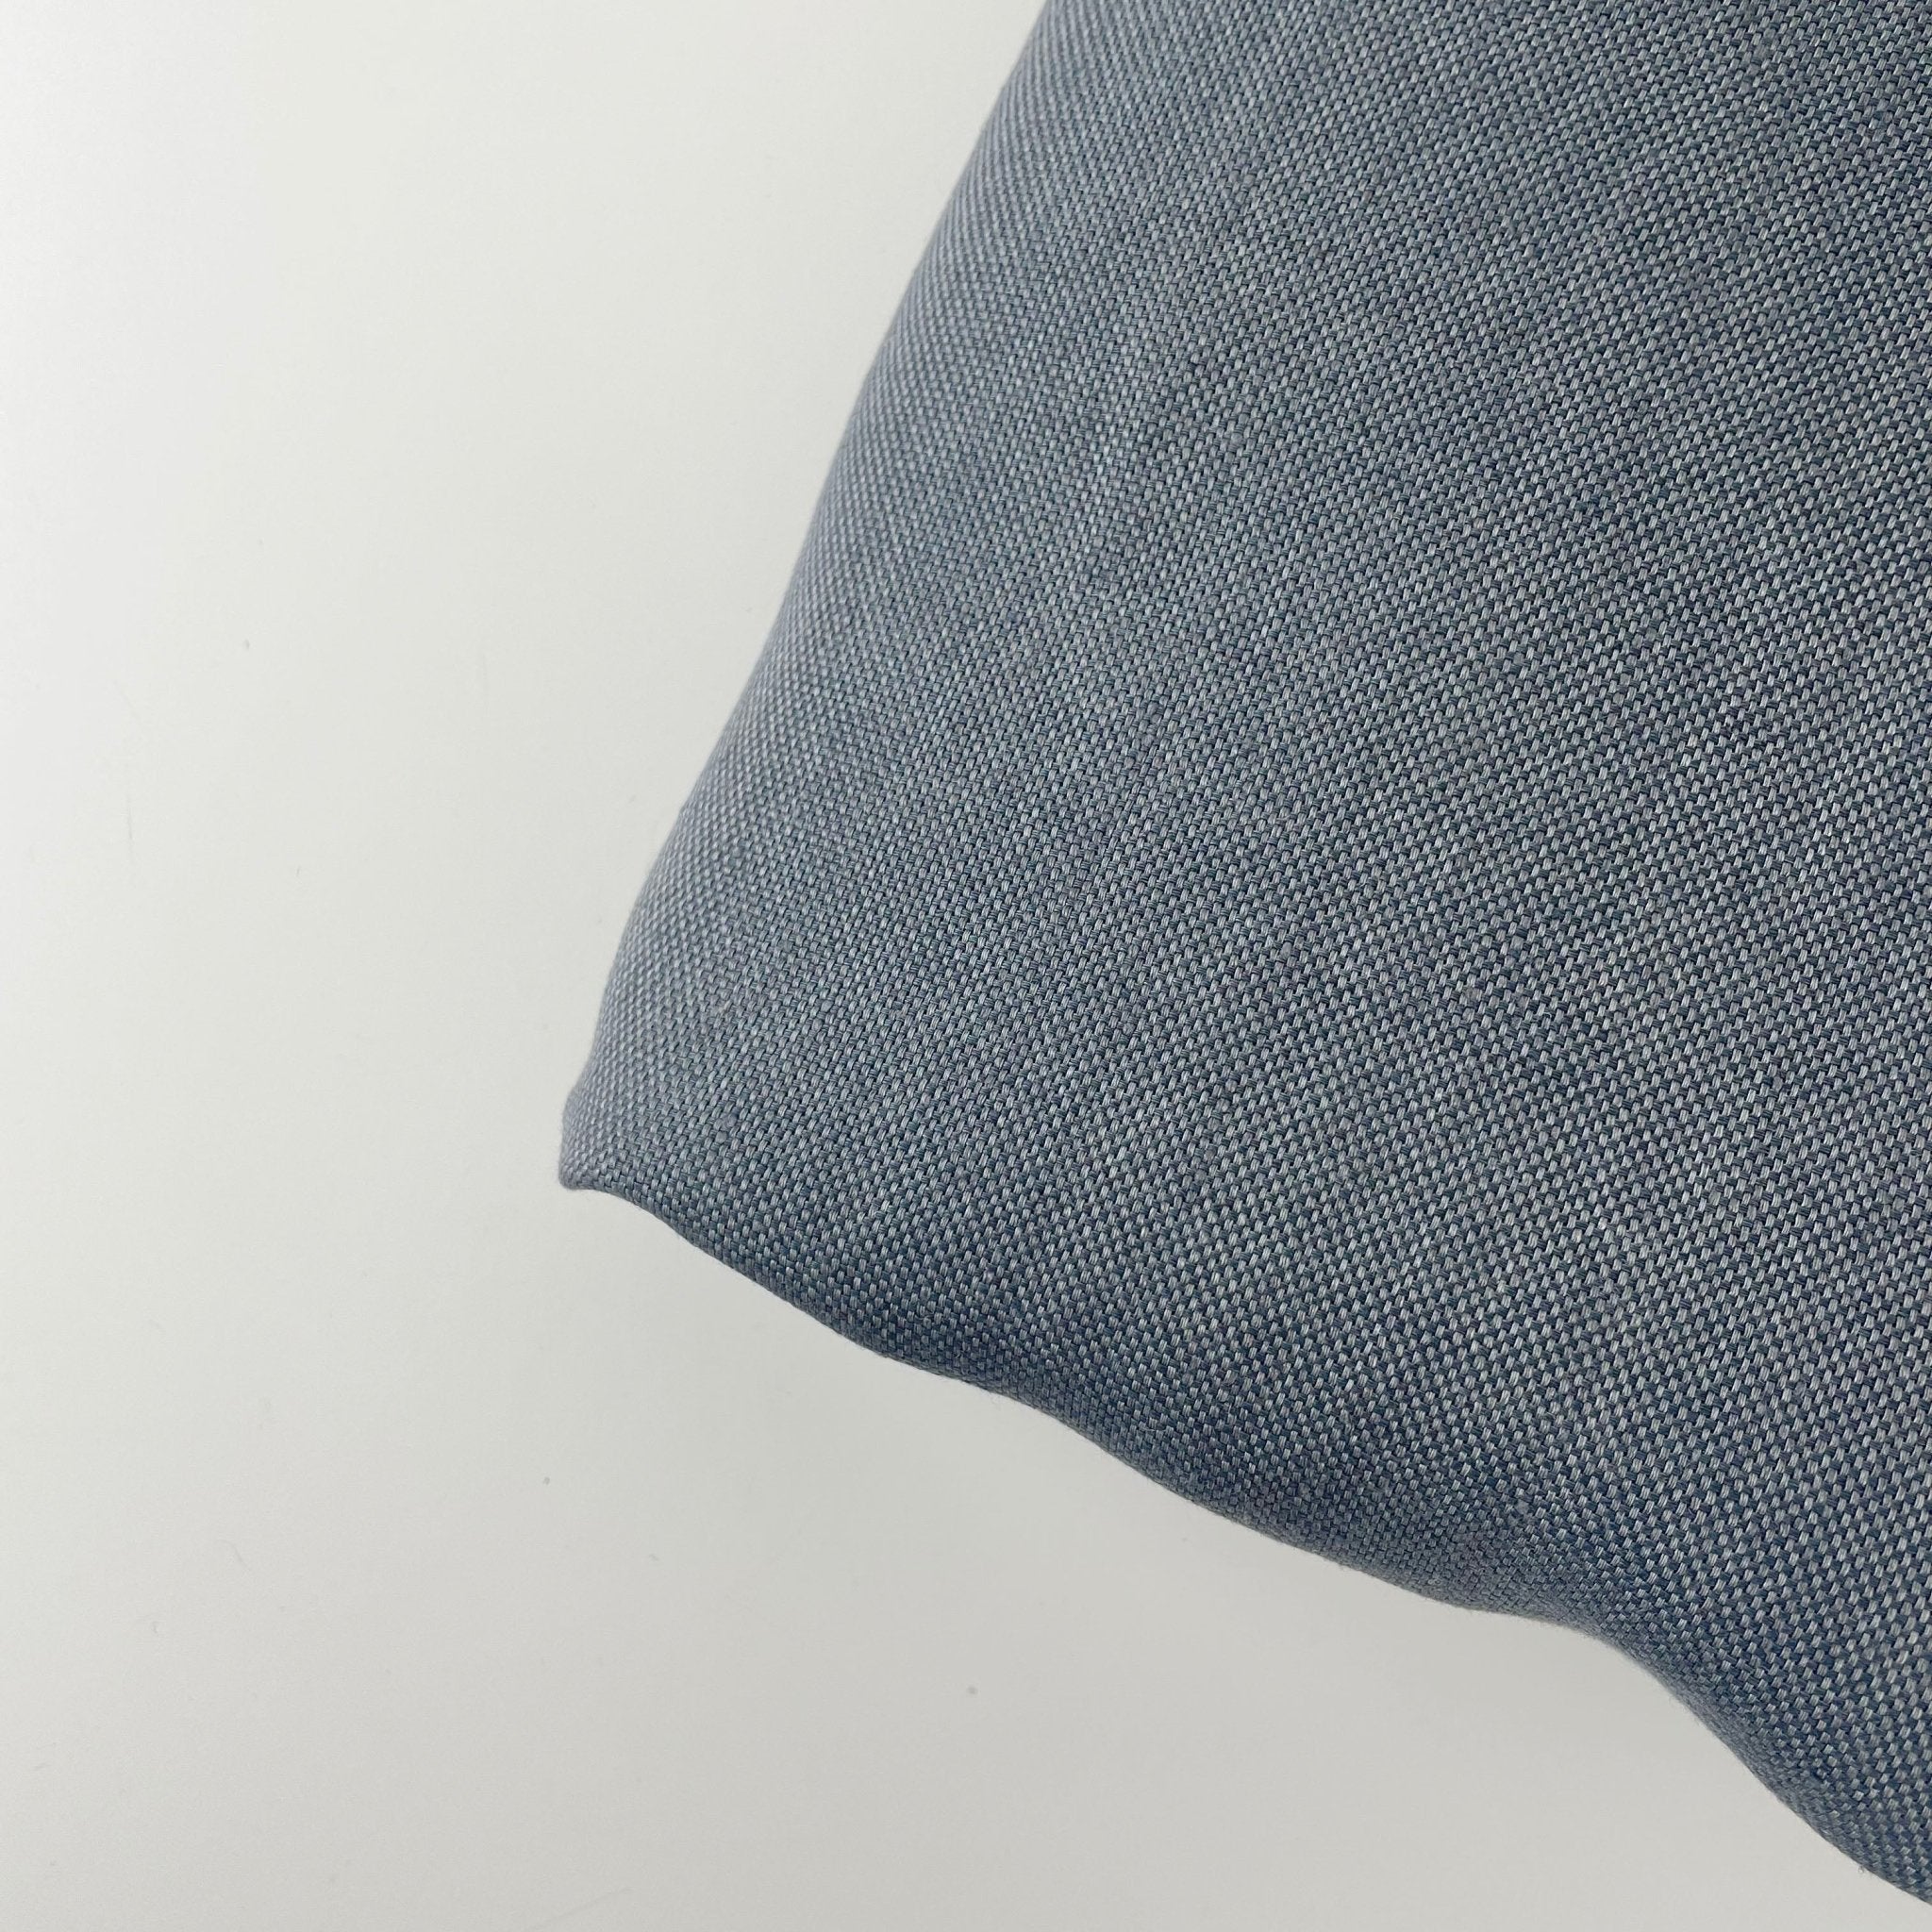 Linen Natural Grey Dot Fabric 7288 7438 - The Linen Lab - Grey